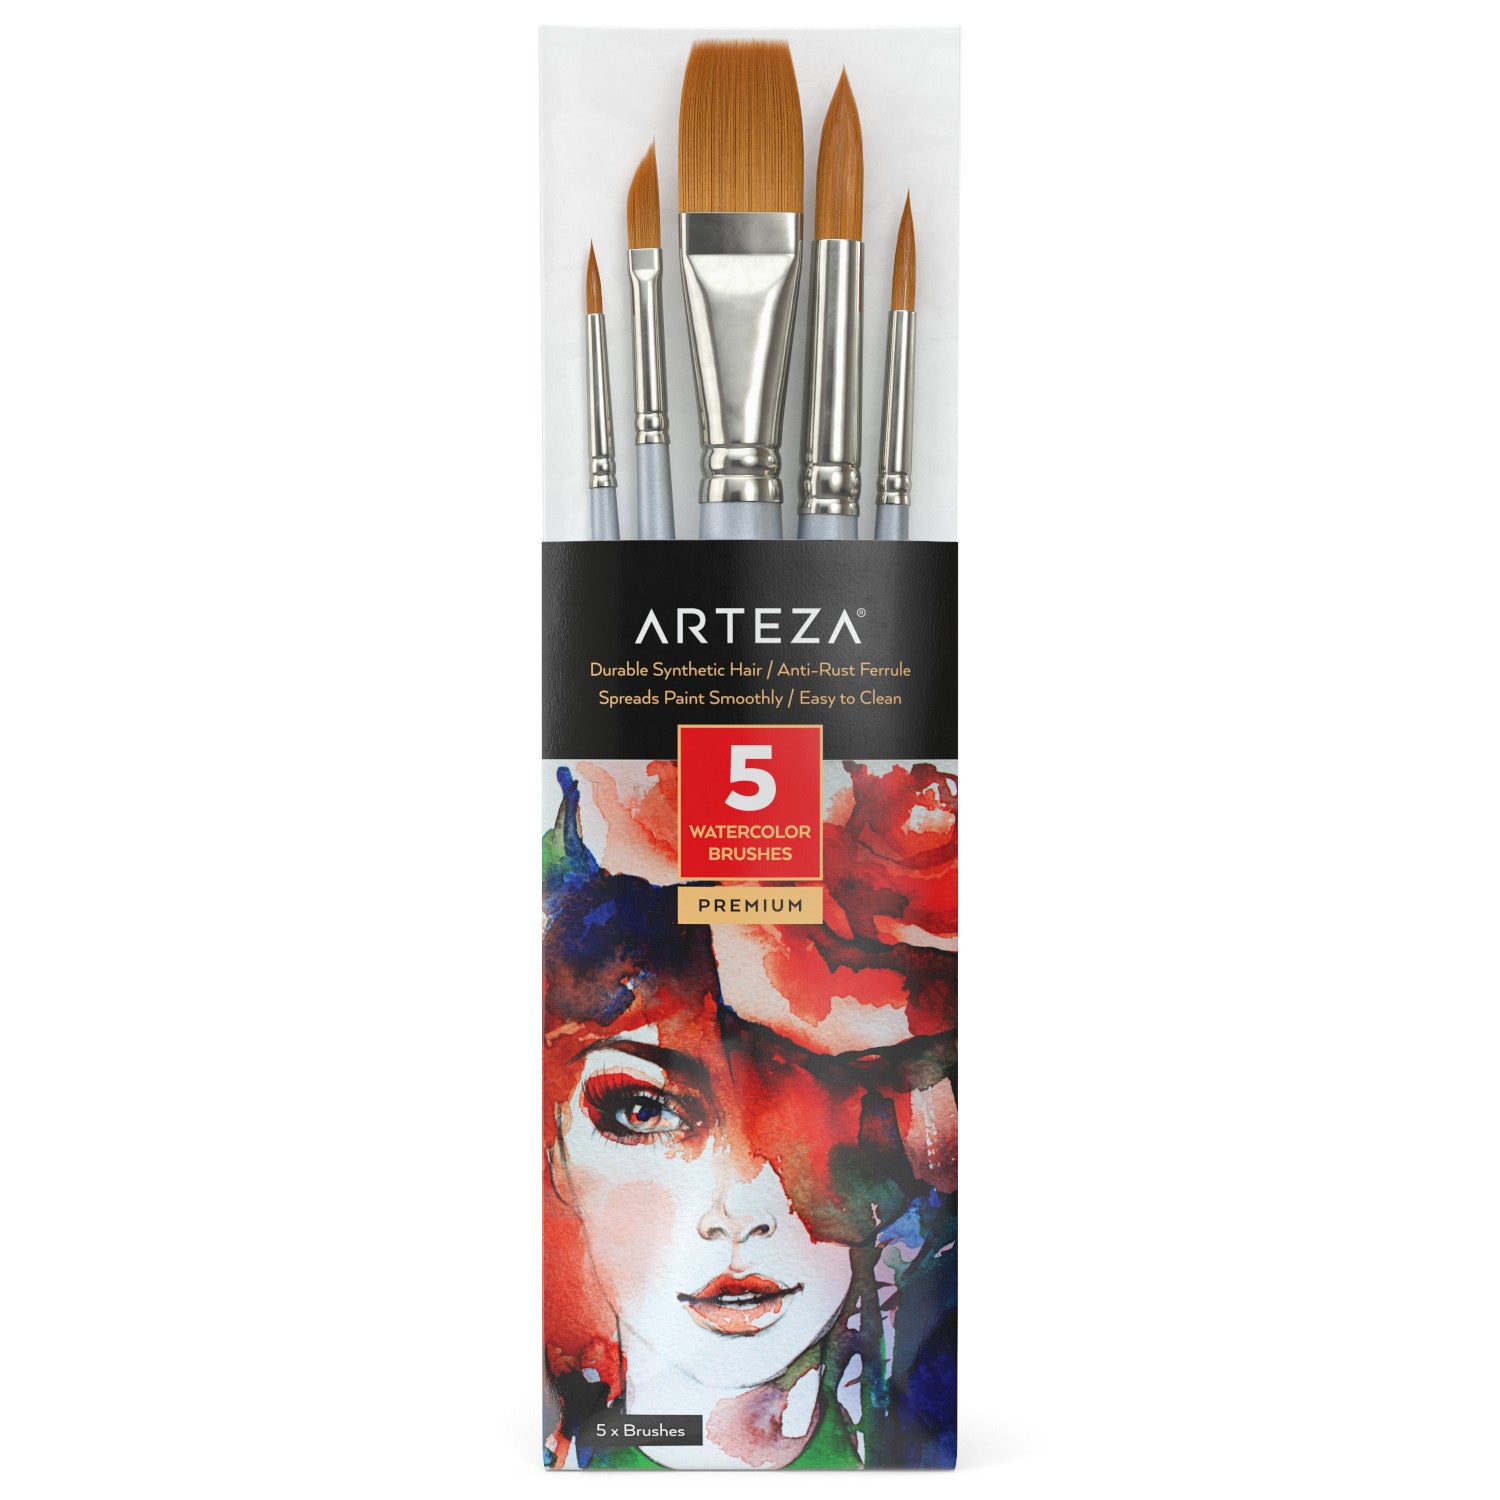 ALTENEW: Artist Watercolor Brushes